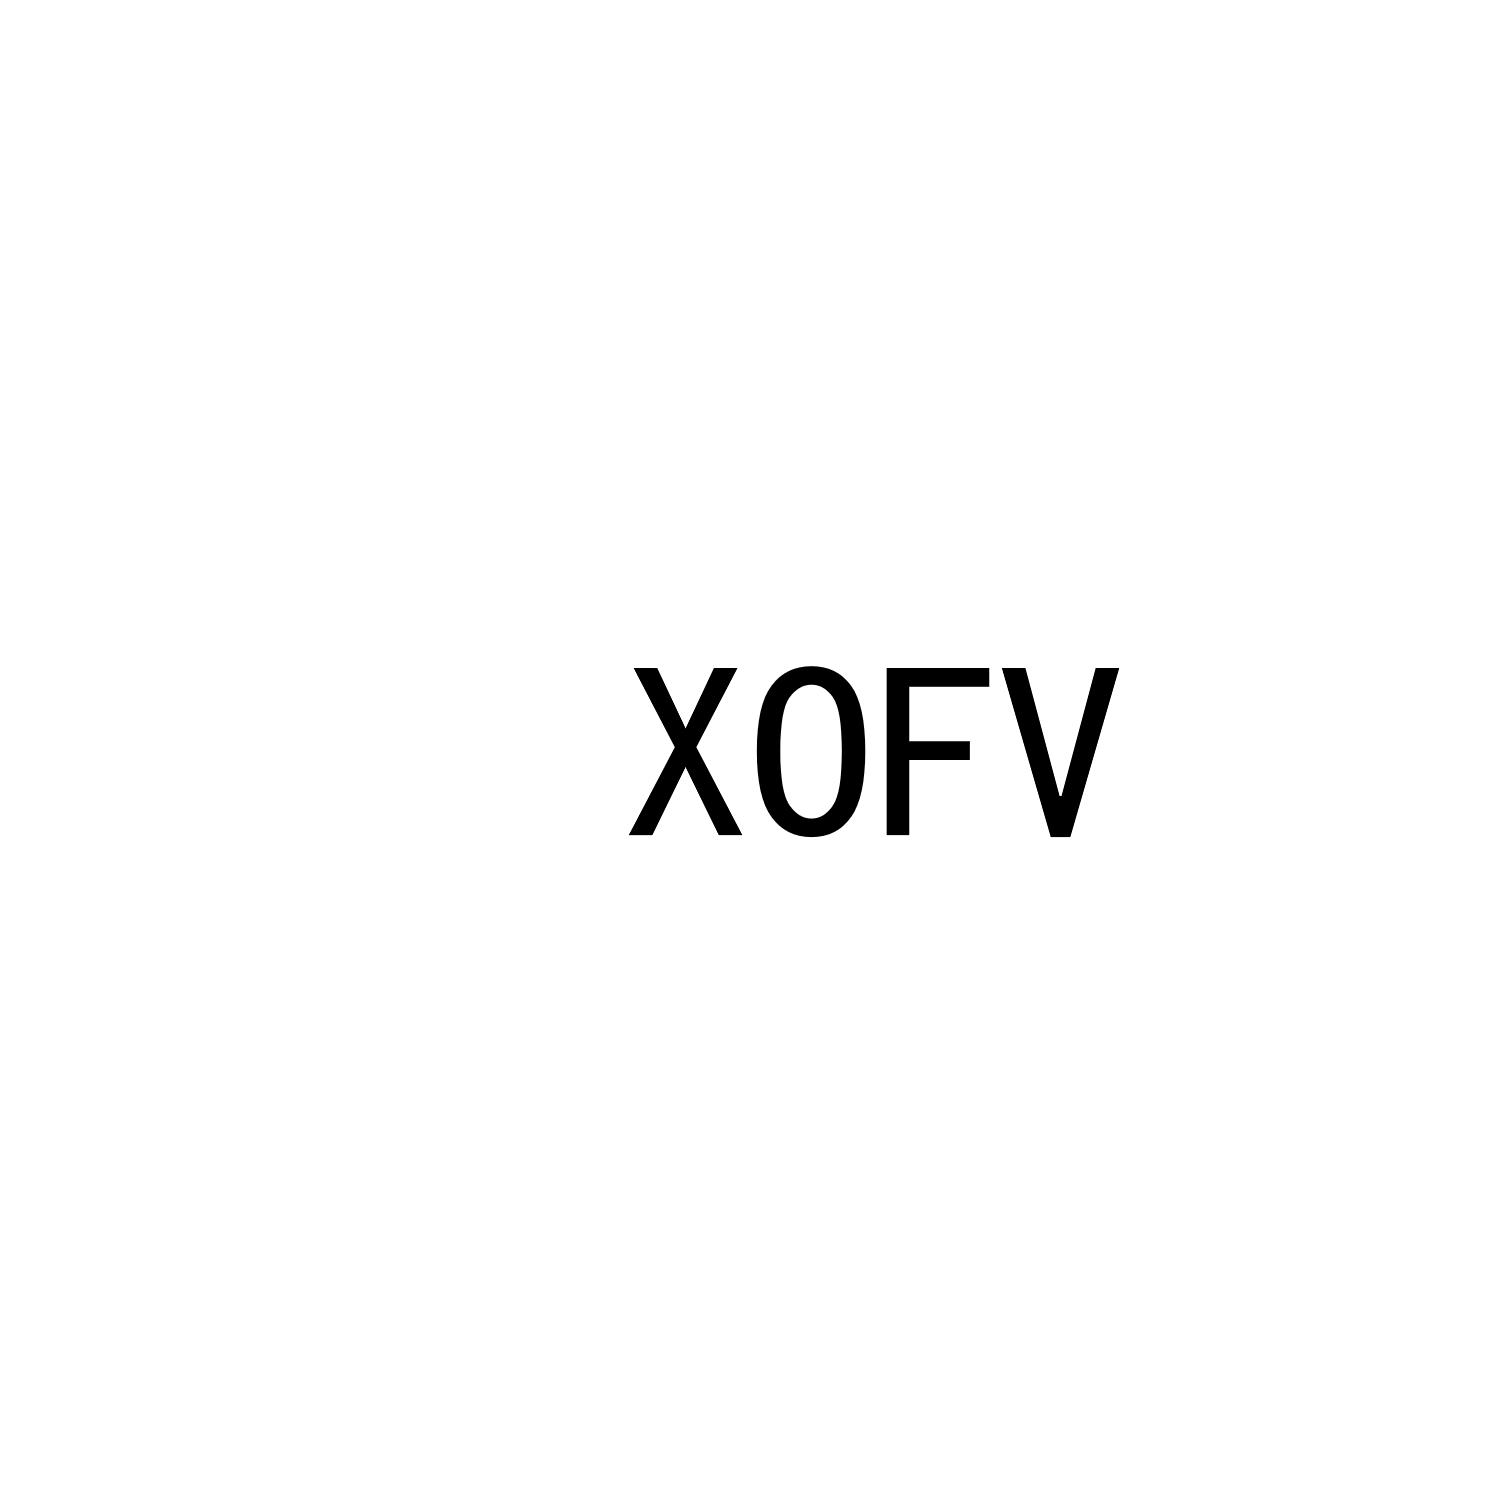 XOFV